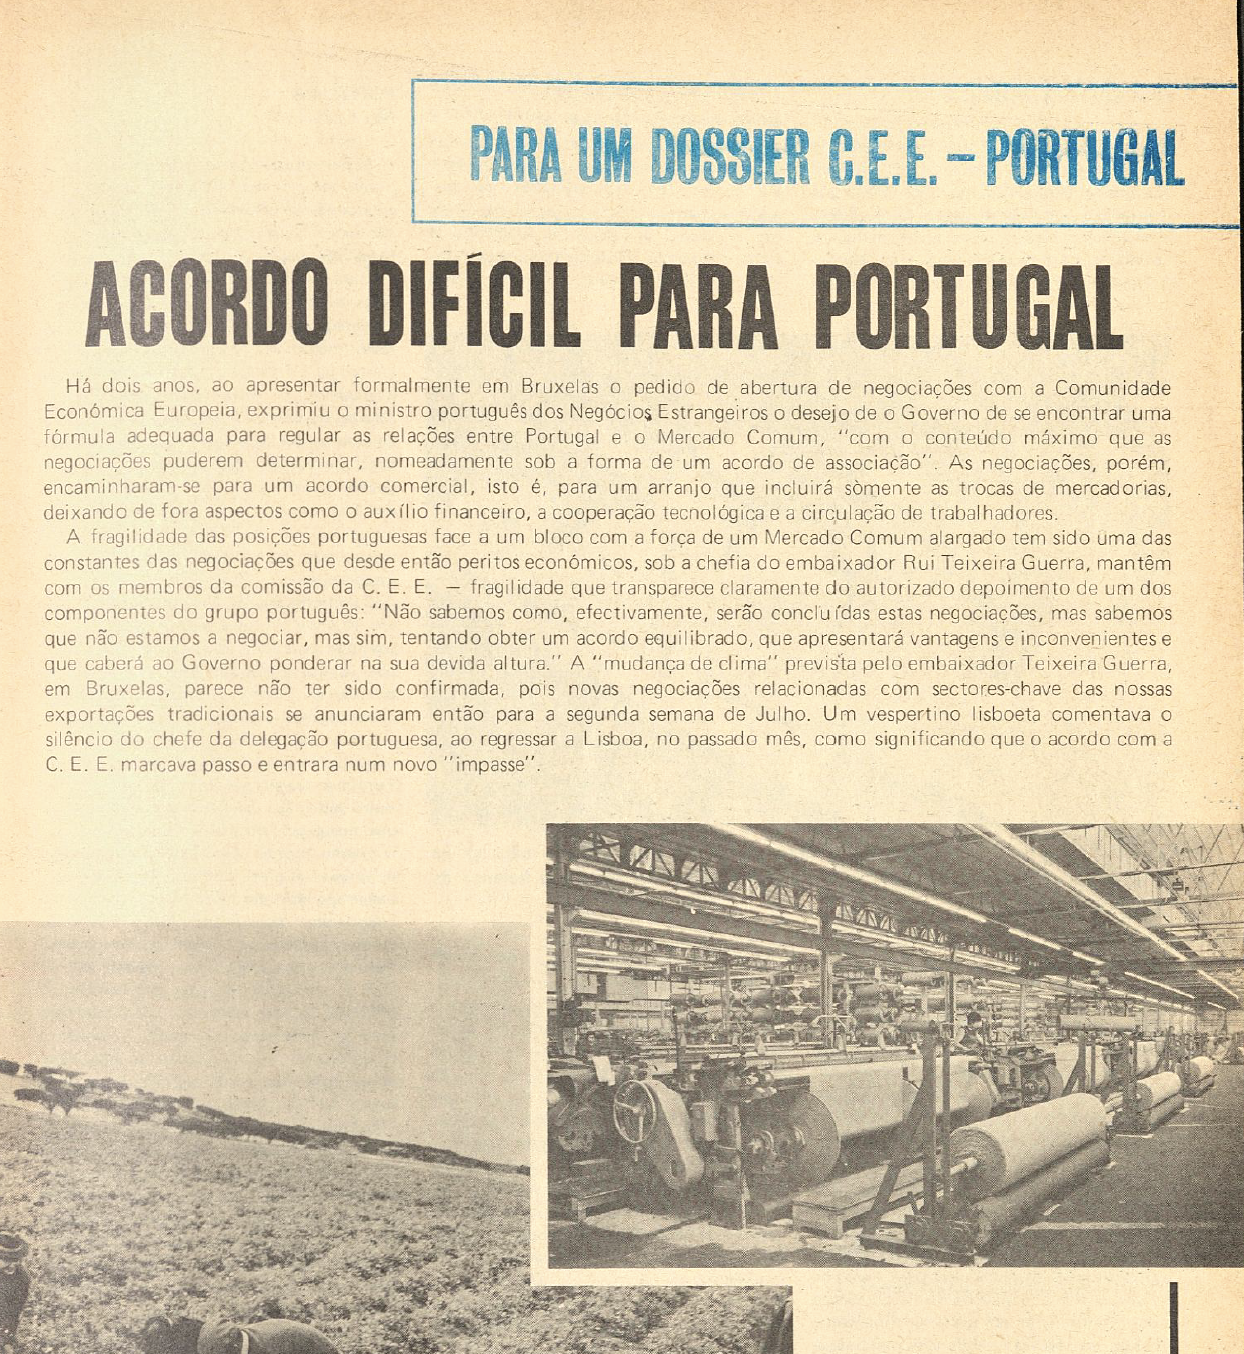 "Acordo díficil para Portugal"